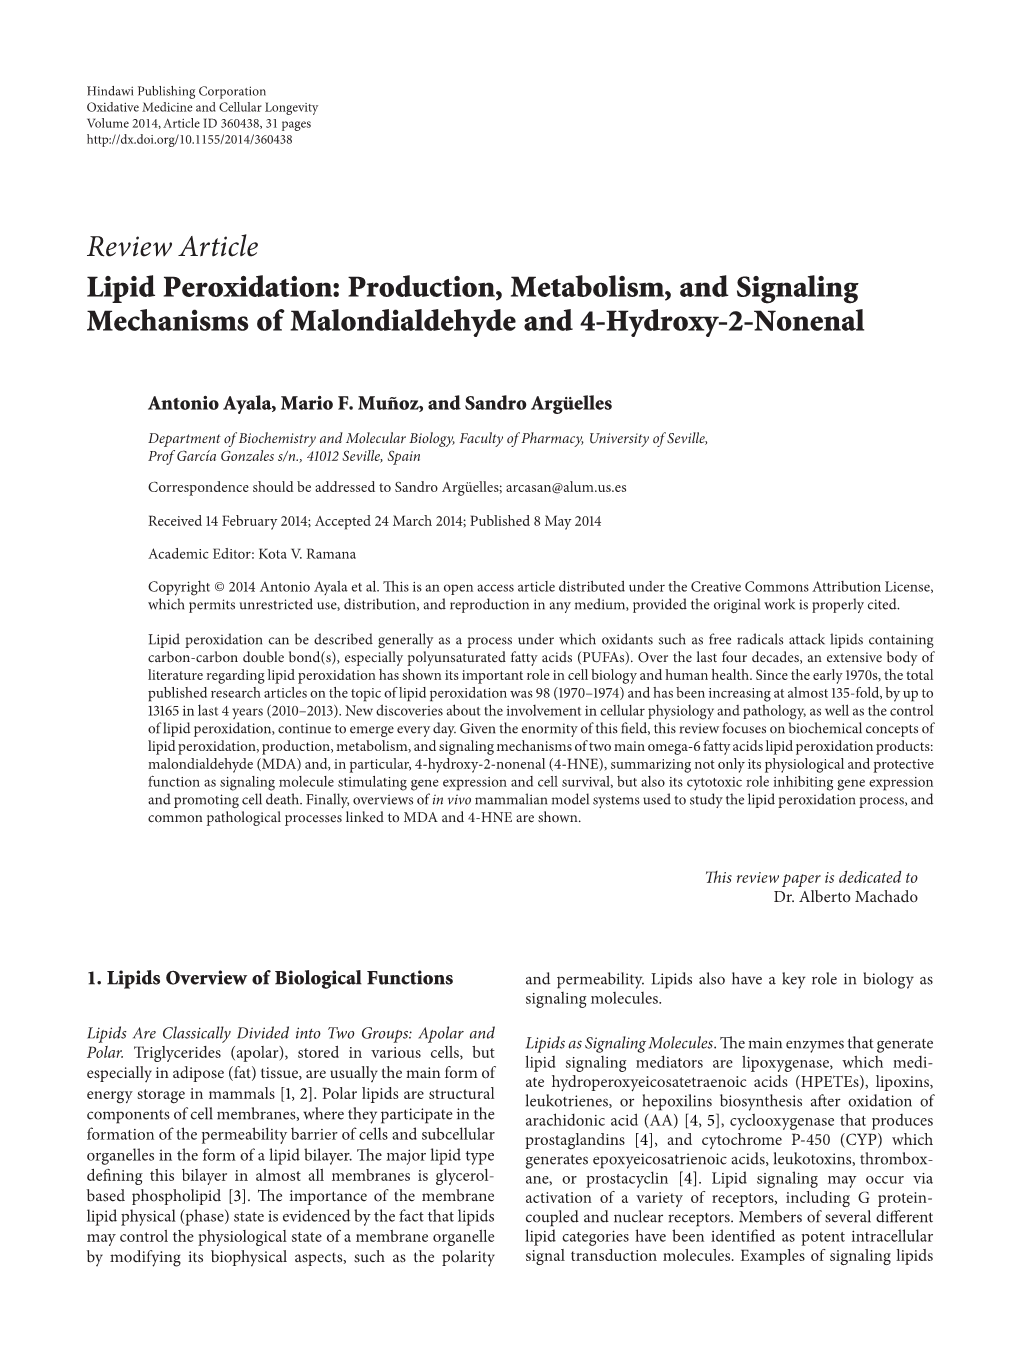 Lipid Peroxidation: Production, Metabolism, and Signaling Mechanisms of Malondialdehyde and 4-Hydroxy-2-Nonenal